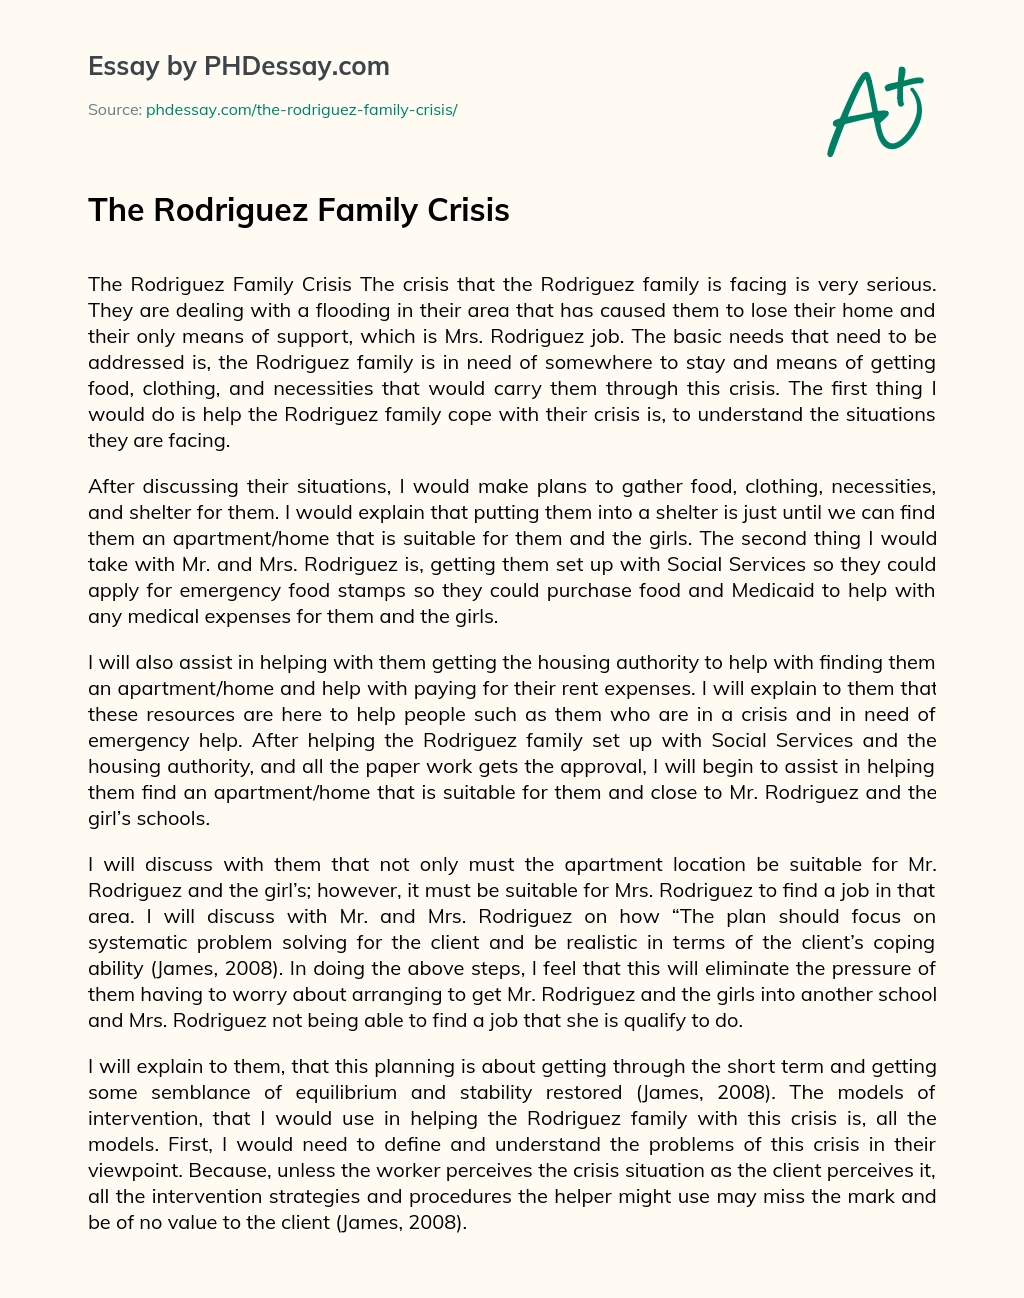 The Rodriguez Family Crisis essay